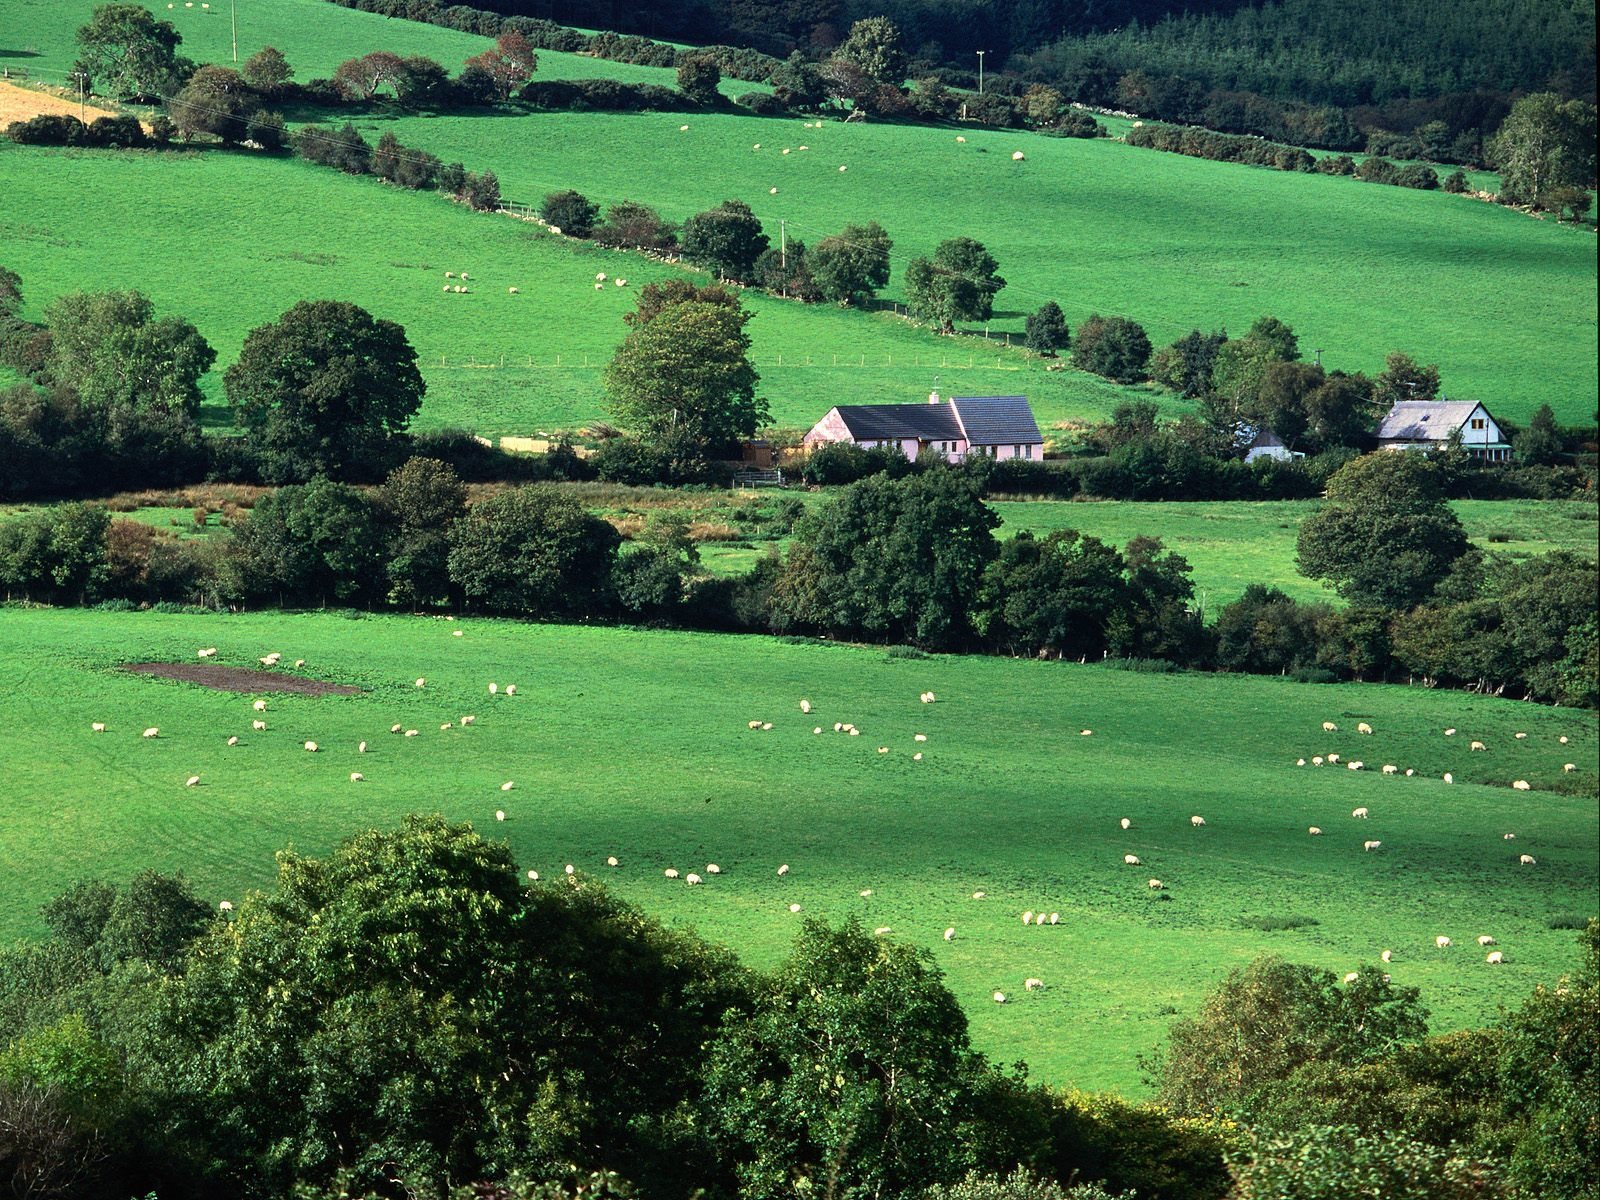  scenery of Ireland Wallpapers   Landscape Wallpapers   V3 Wallpaper